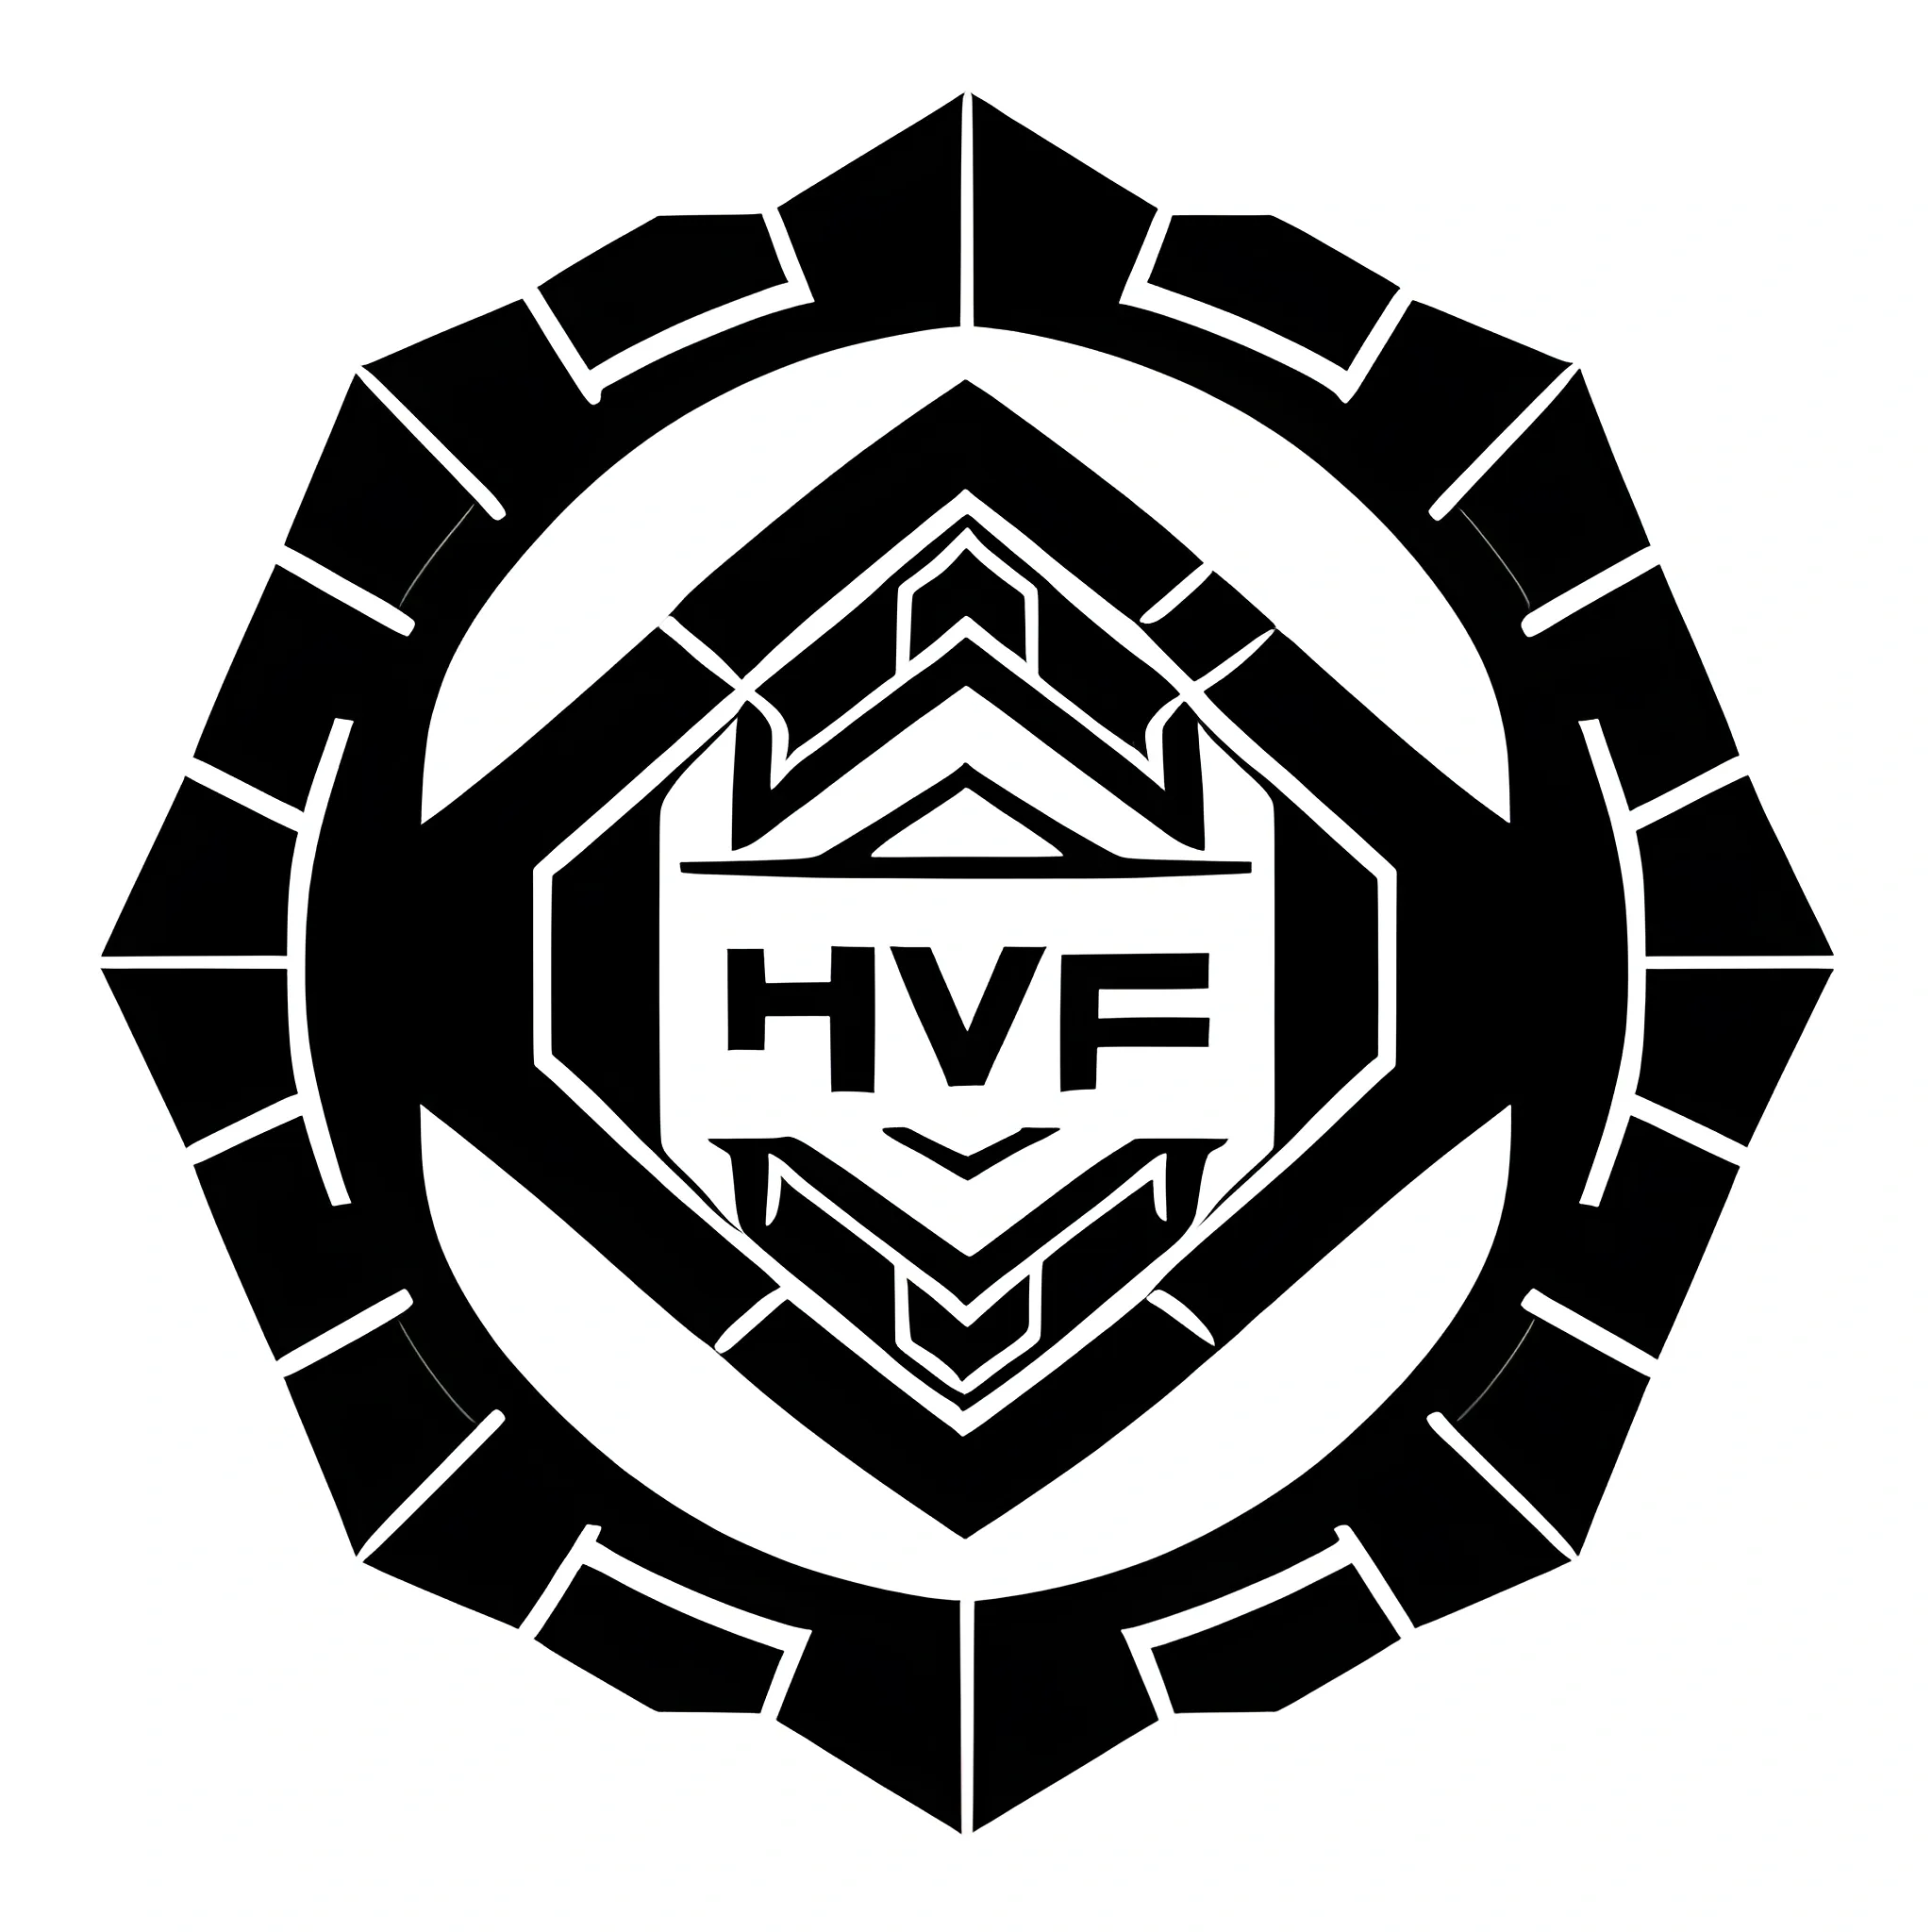 hive logo incorporating this image https://encrypted-tbn0.gstatic.com/images?q=tbn:ANd9GcTelDIdp__NYp9RSjYuxTWrBA-ov6yA8RexNkMRTj6R8-K3_YNh8SUTTHRcUyWcD3nEZPA&usqp=CAU